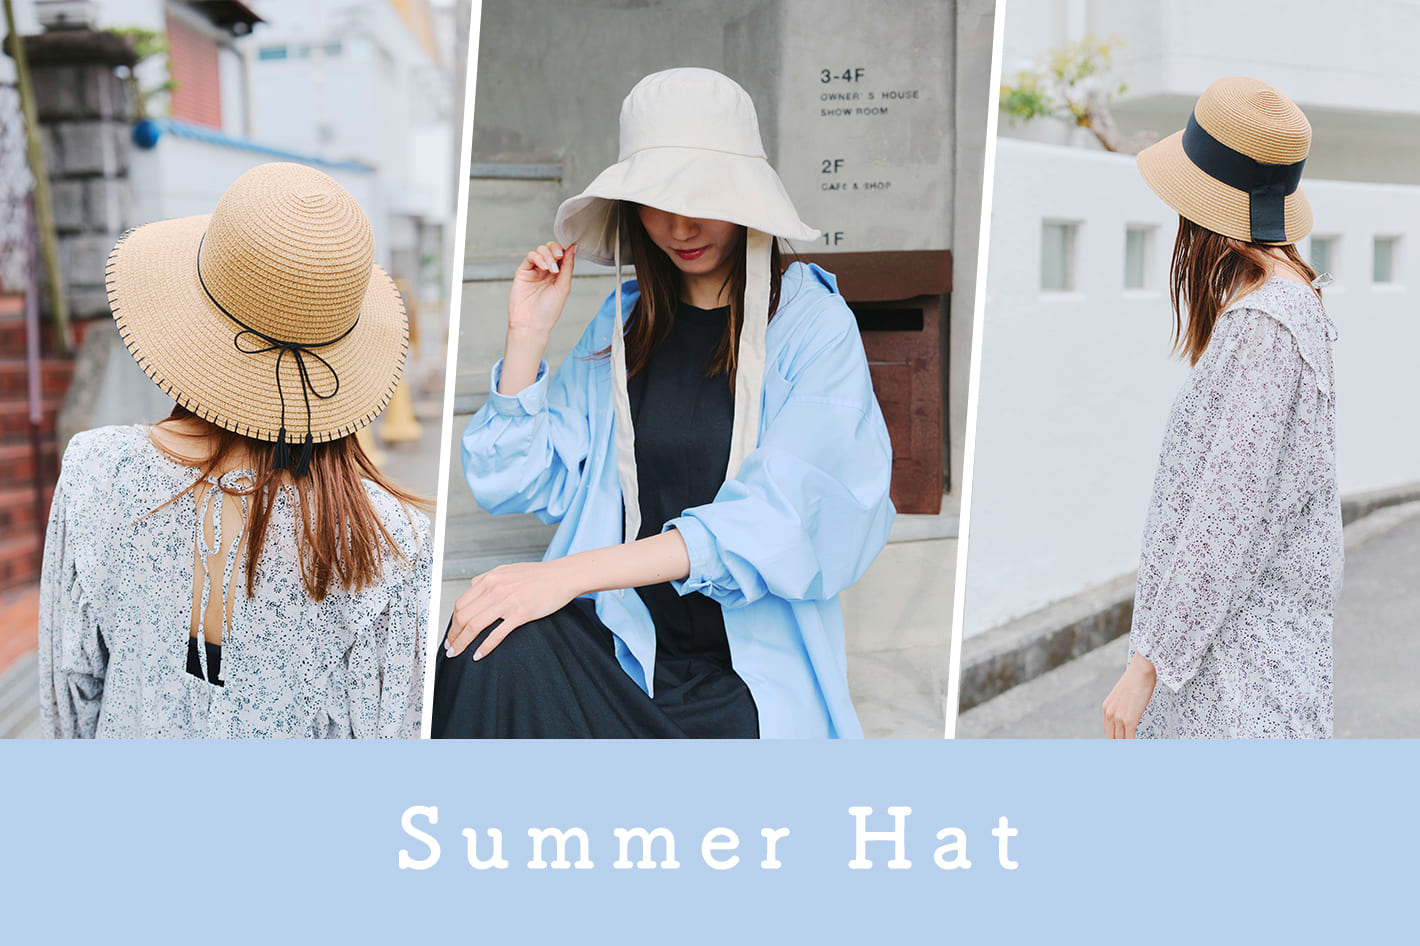 salut! Summer hat -「帽子」で、夏のコーデを楽しみませんか？-